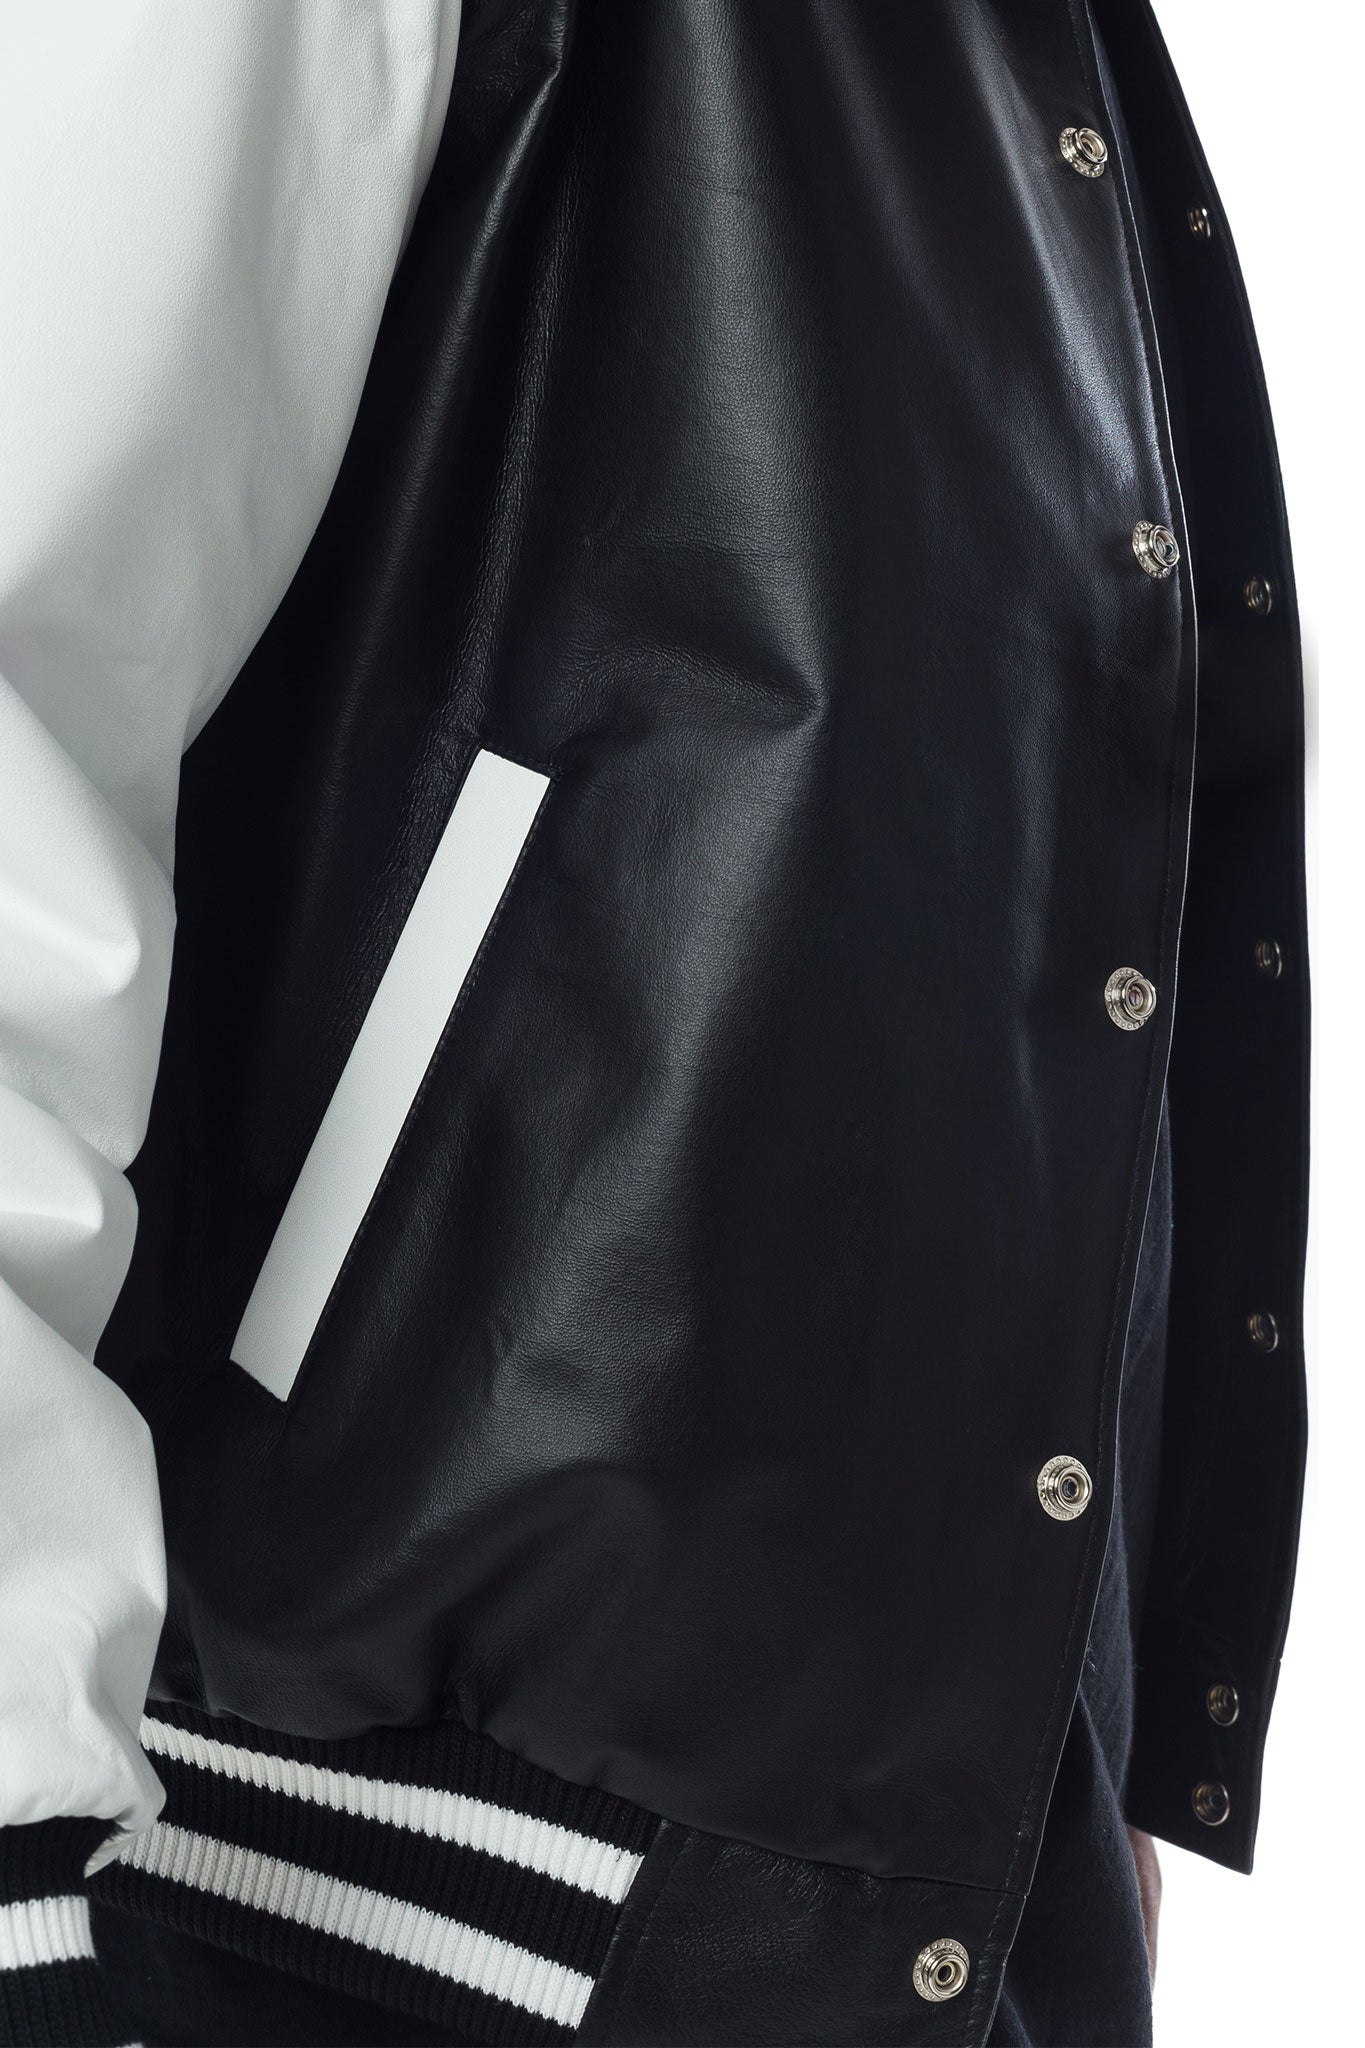 Cross Colours Do Baseball Leather Jacket - Black/White 2x